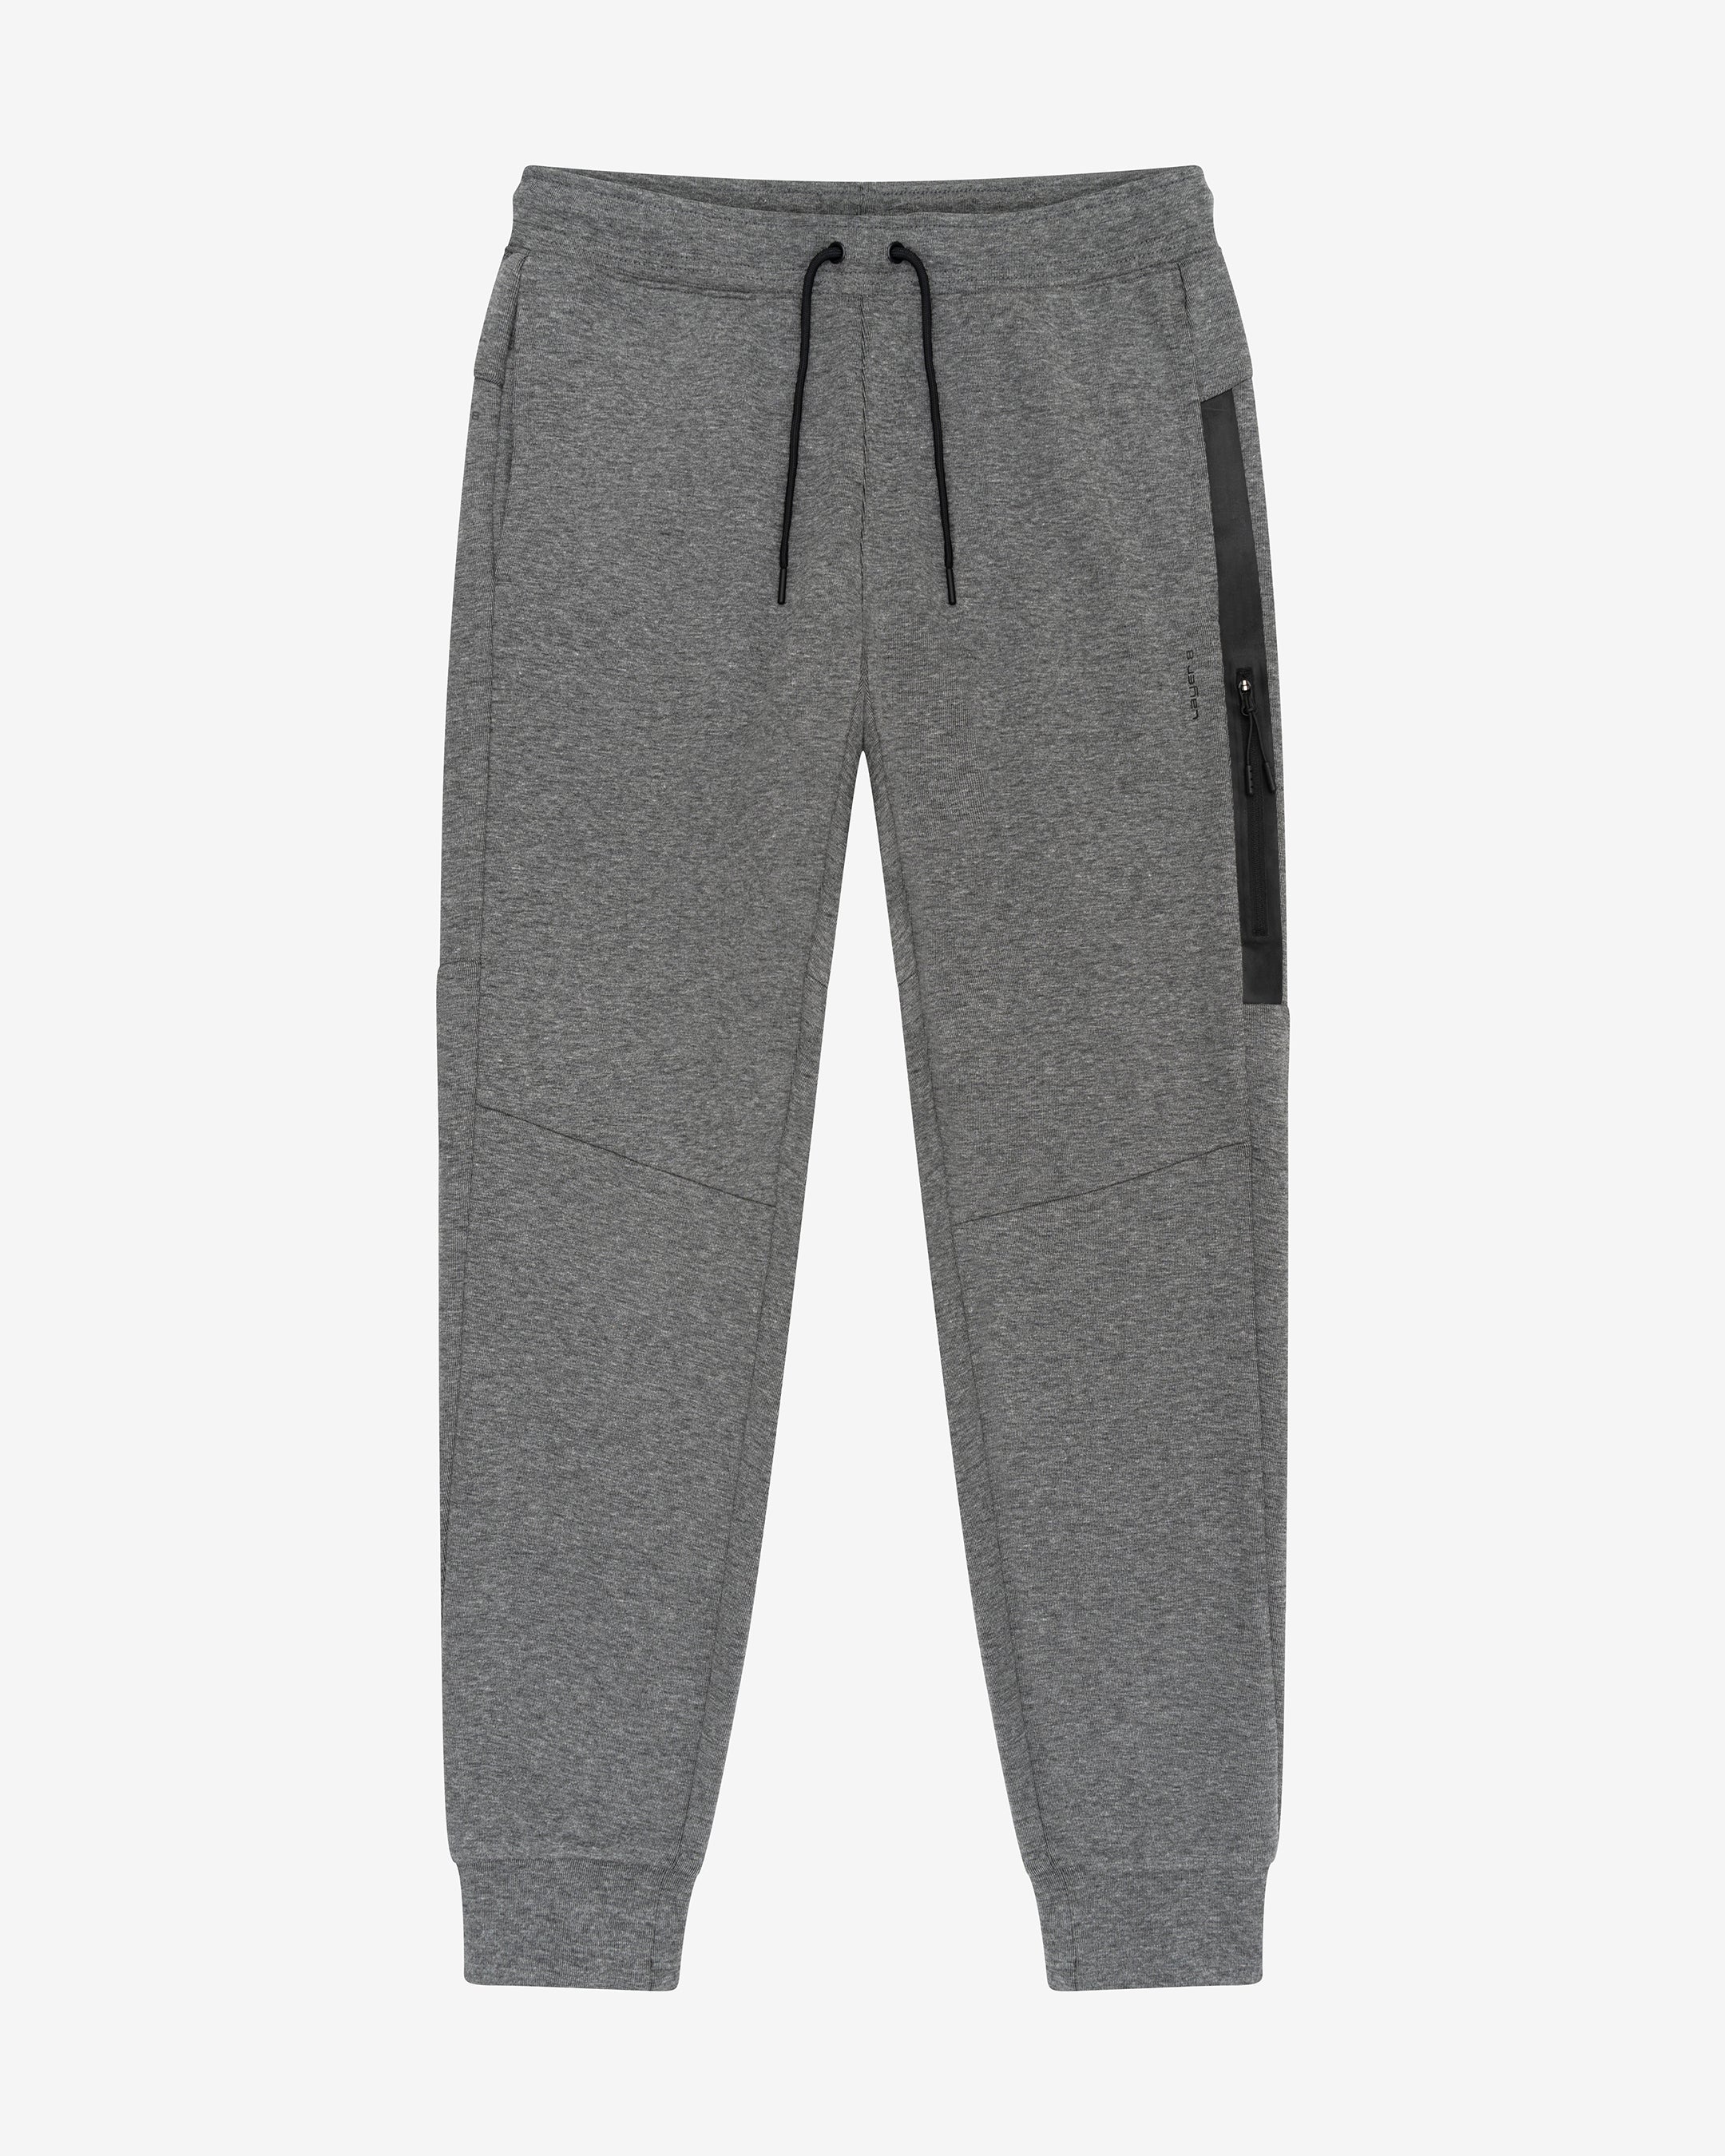 Tek Gear Gray Sweatpants Size XL - 55% off